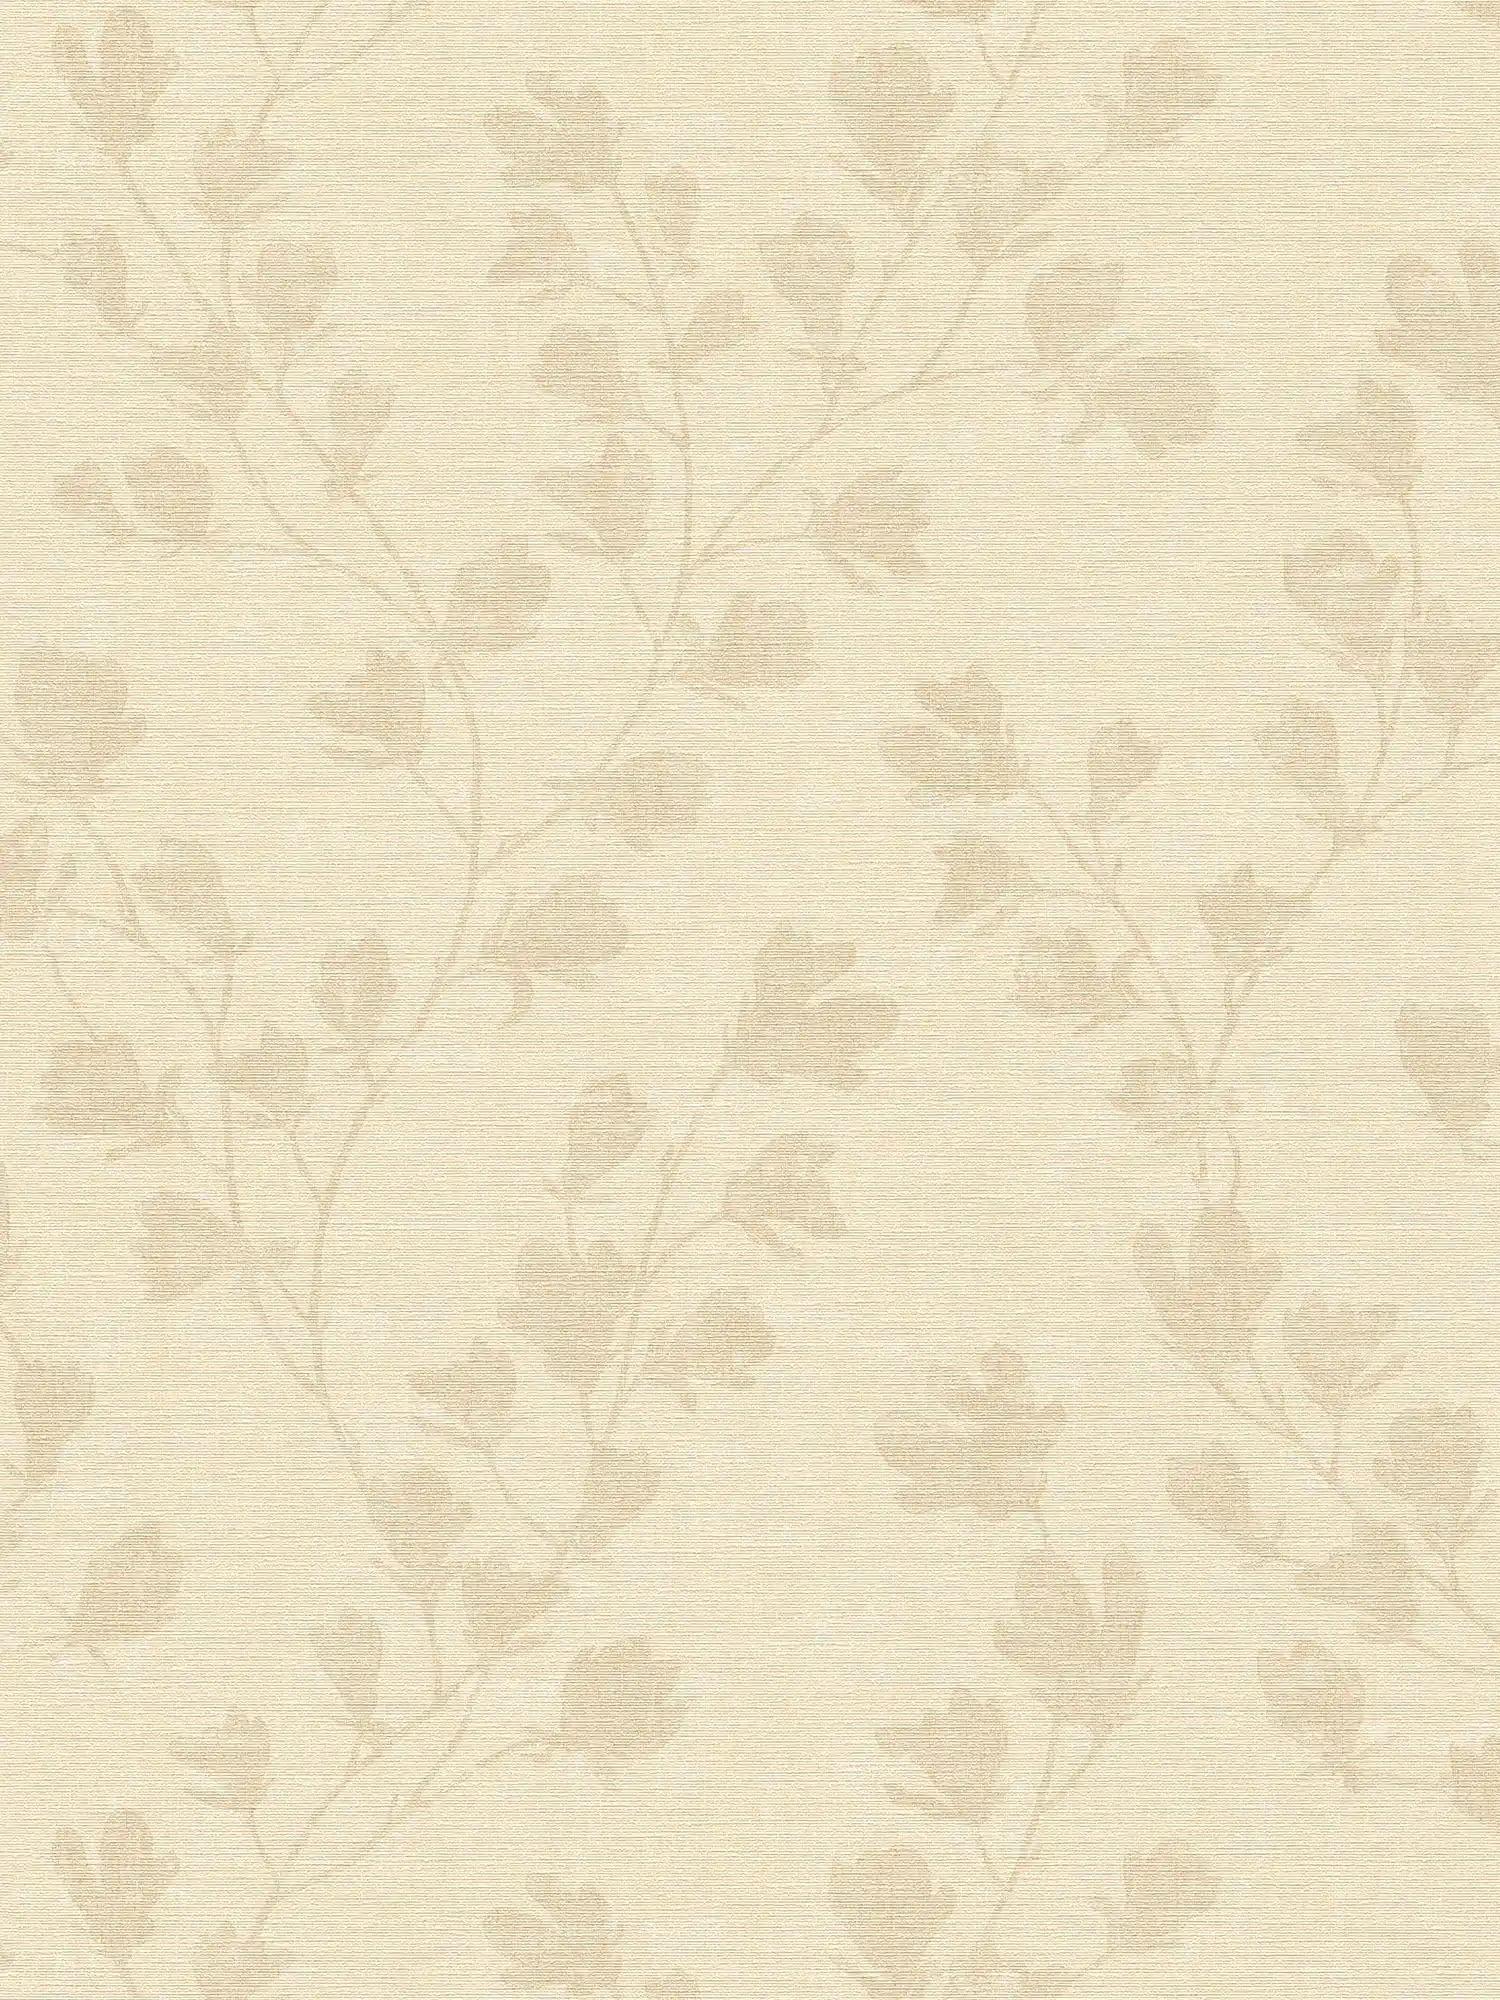 Carta da parati con foglie in stile country - crema, beige
